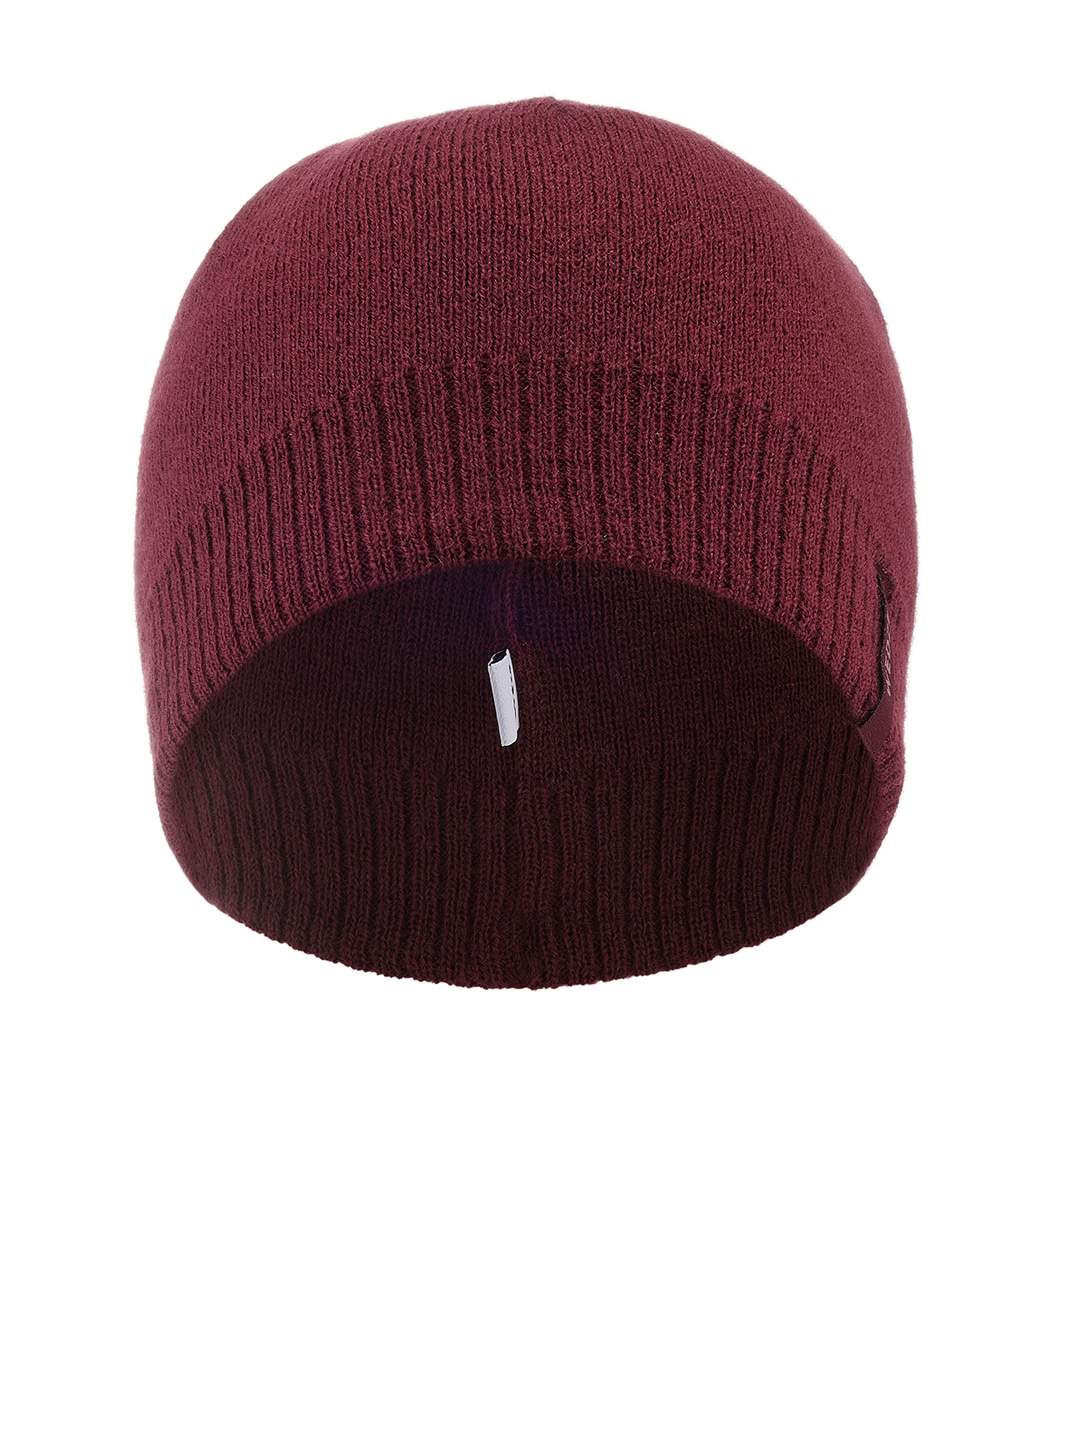 Accessories Hat | WEDZE By Decathlon Unisex Burgundy Solid Flat Cap - OF23501